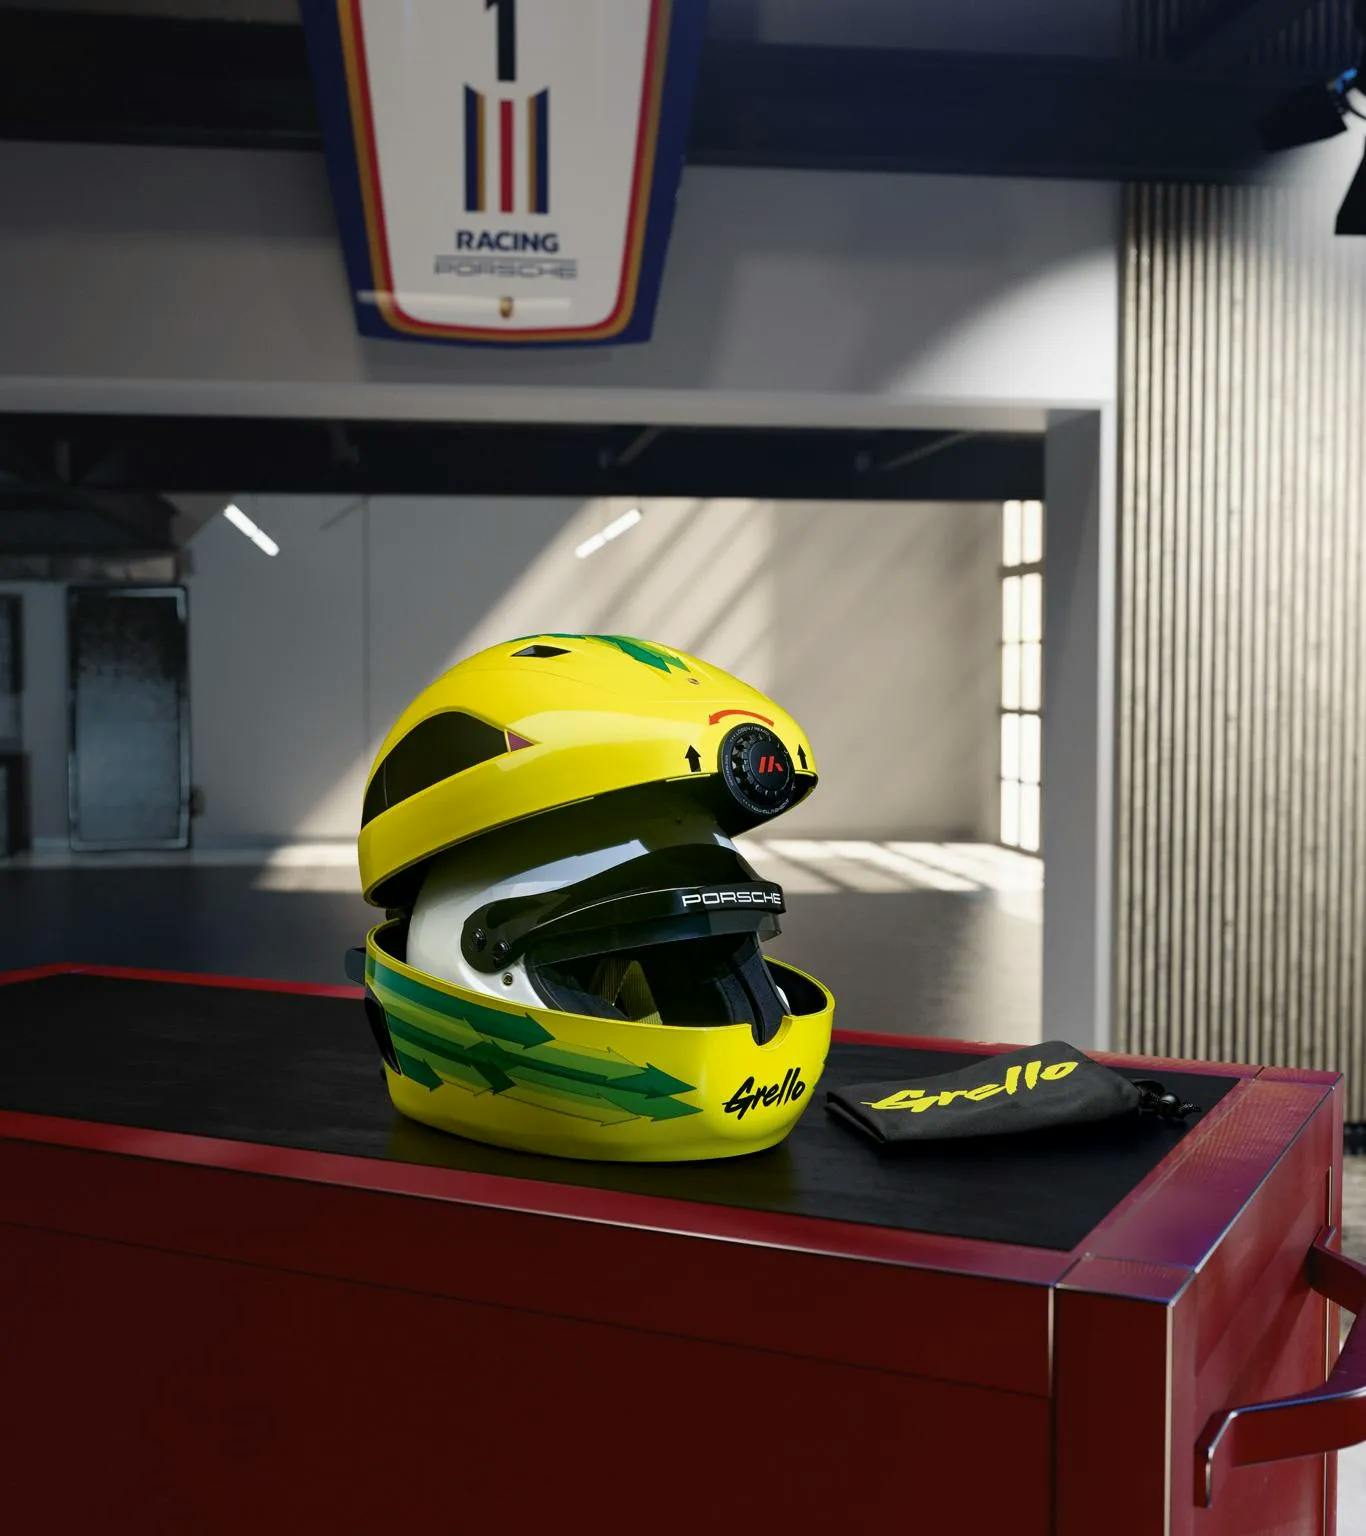 Helmet case in "Grello" design